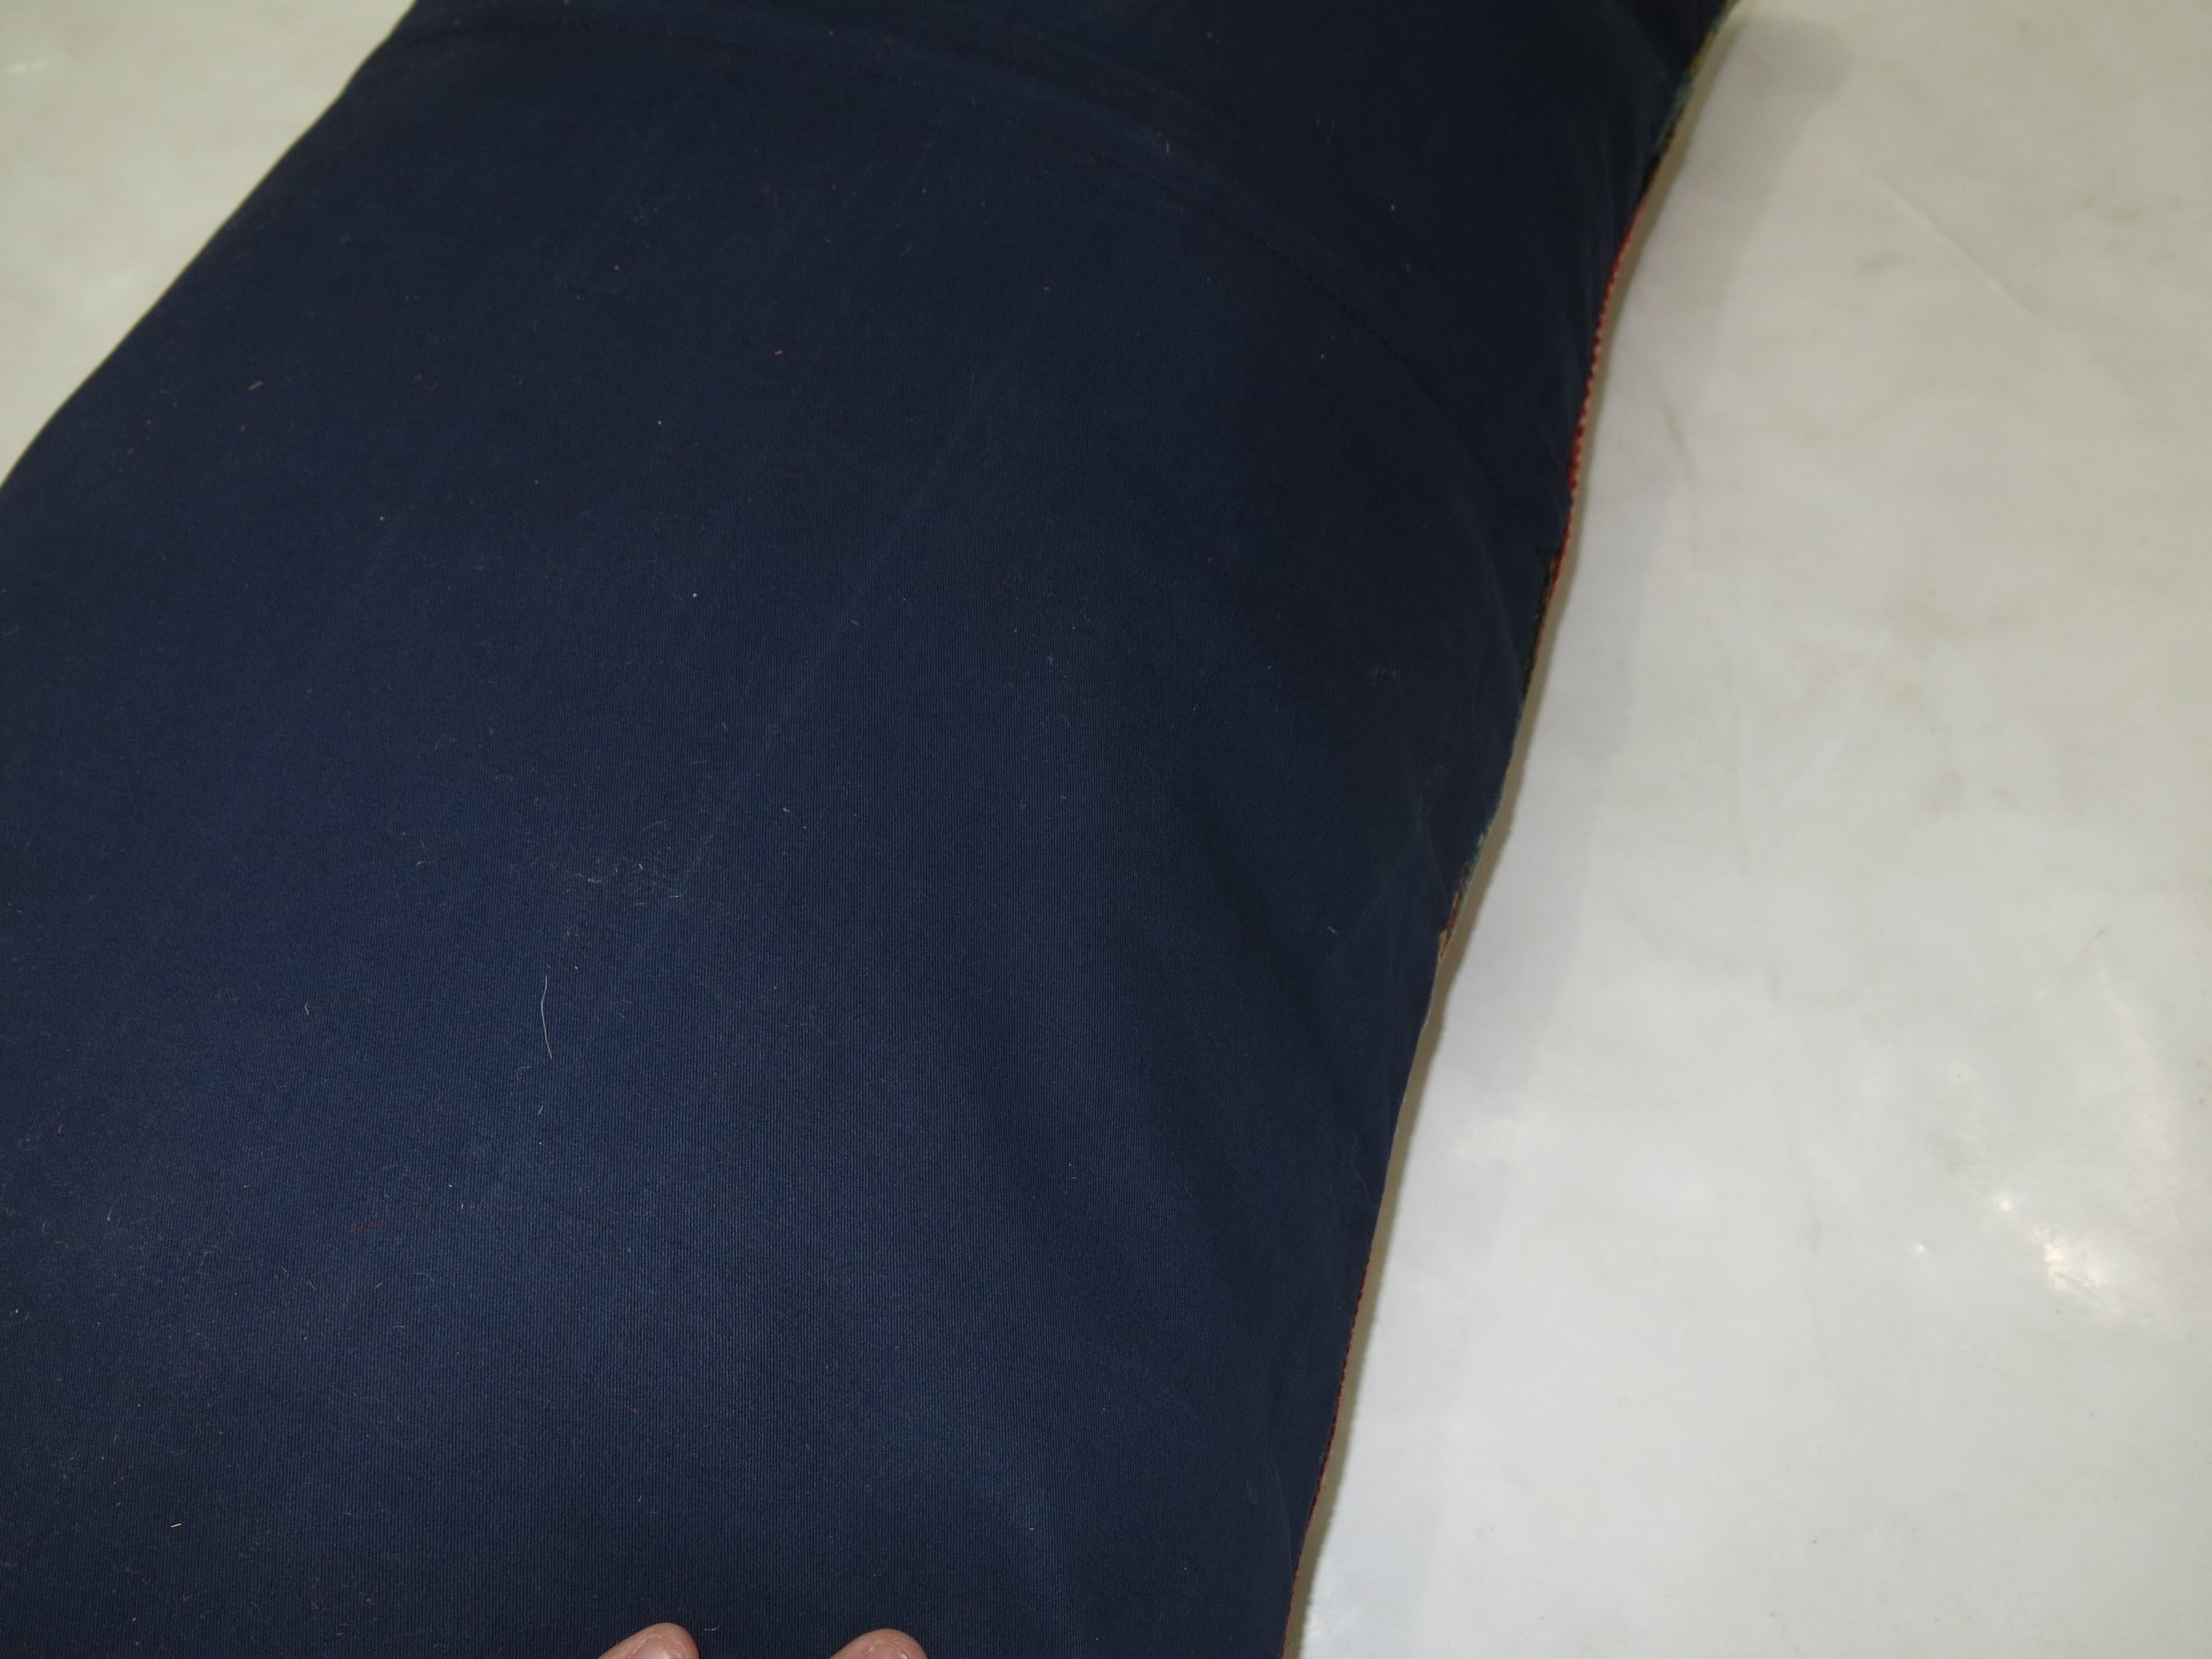 oriental rug pillows